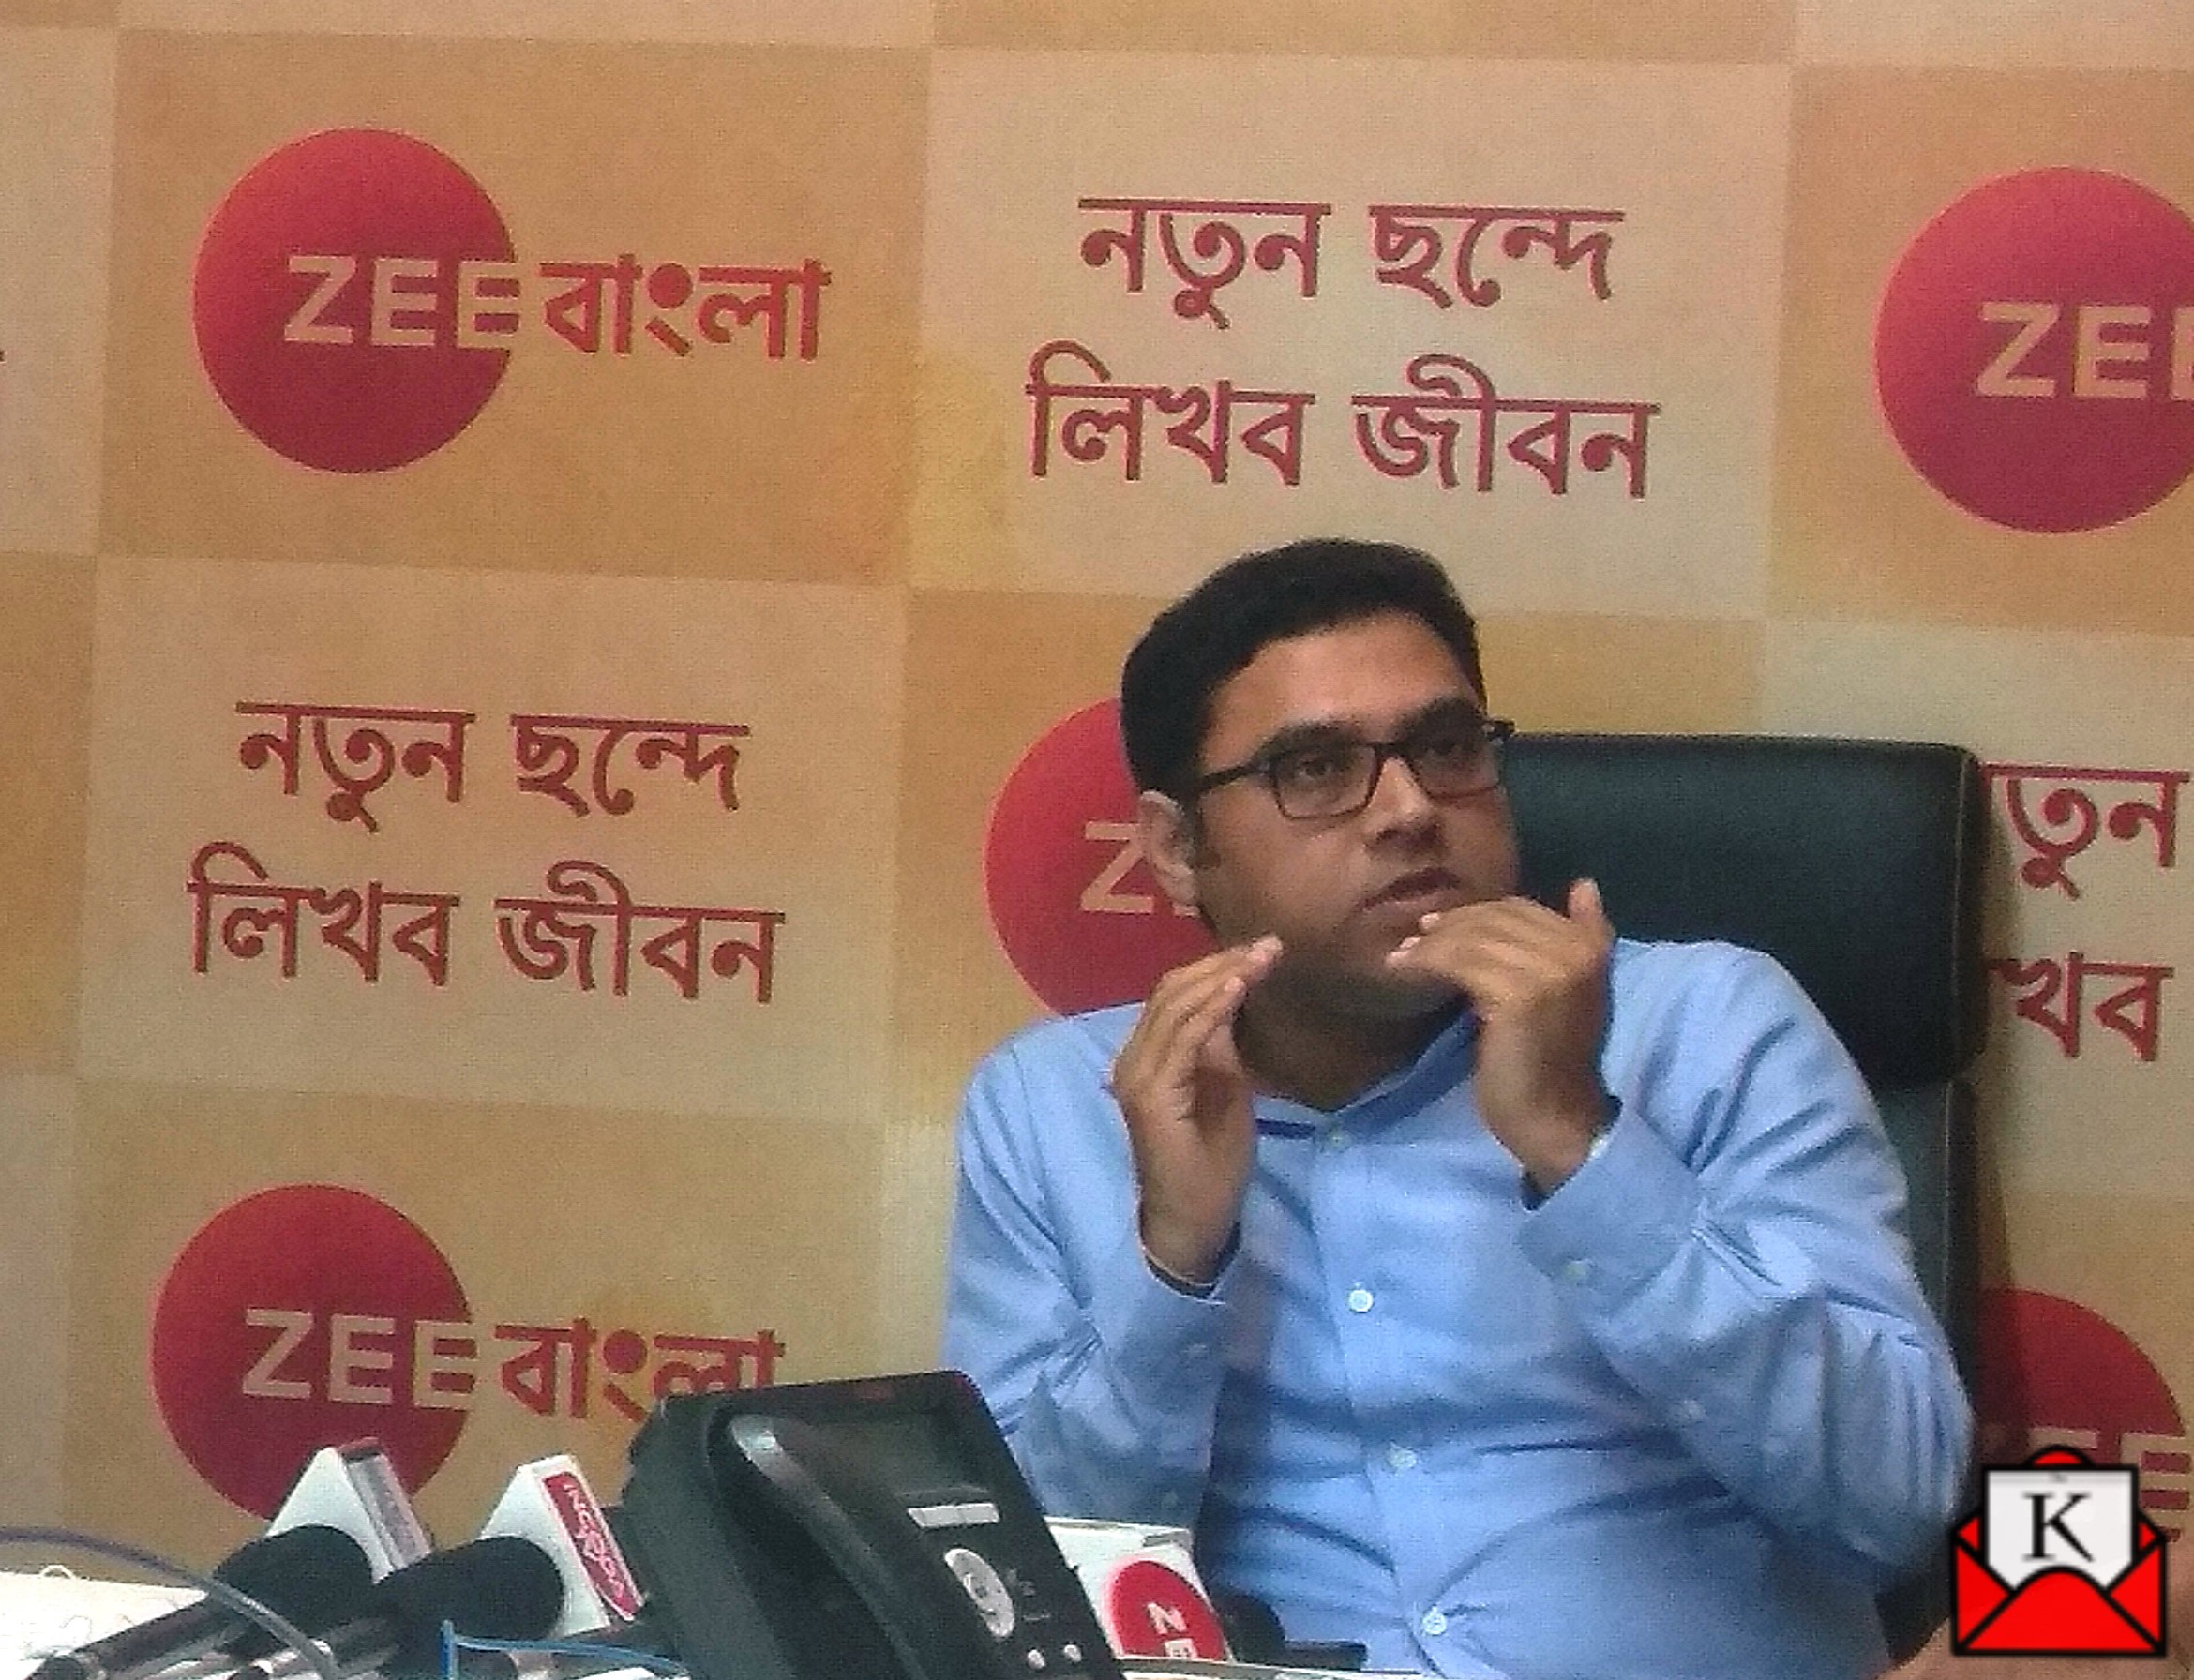 Zee Bangla’s New Brand Philosophy-Notun Chhondey Likhbo Jibon